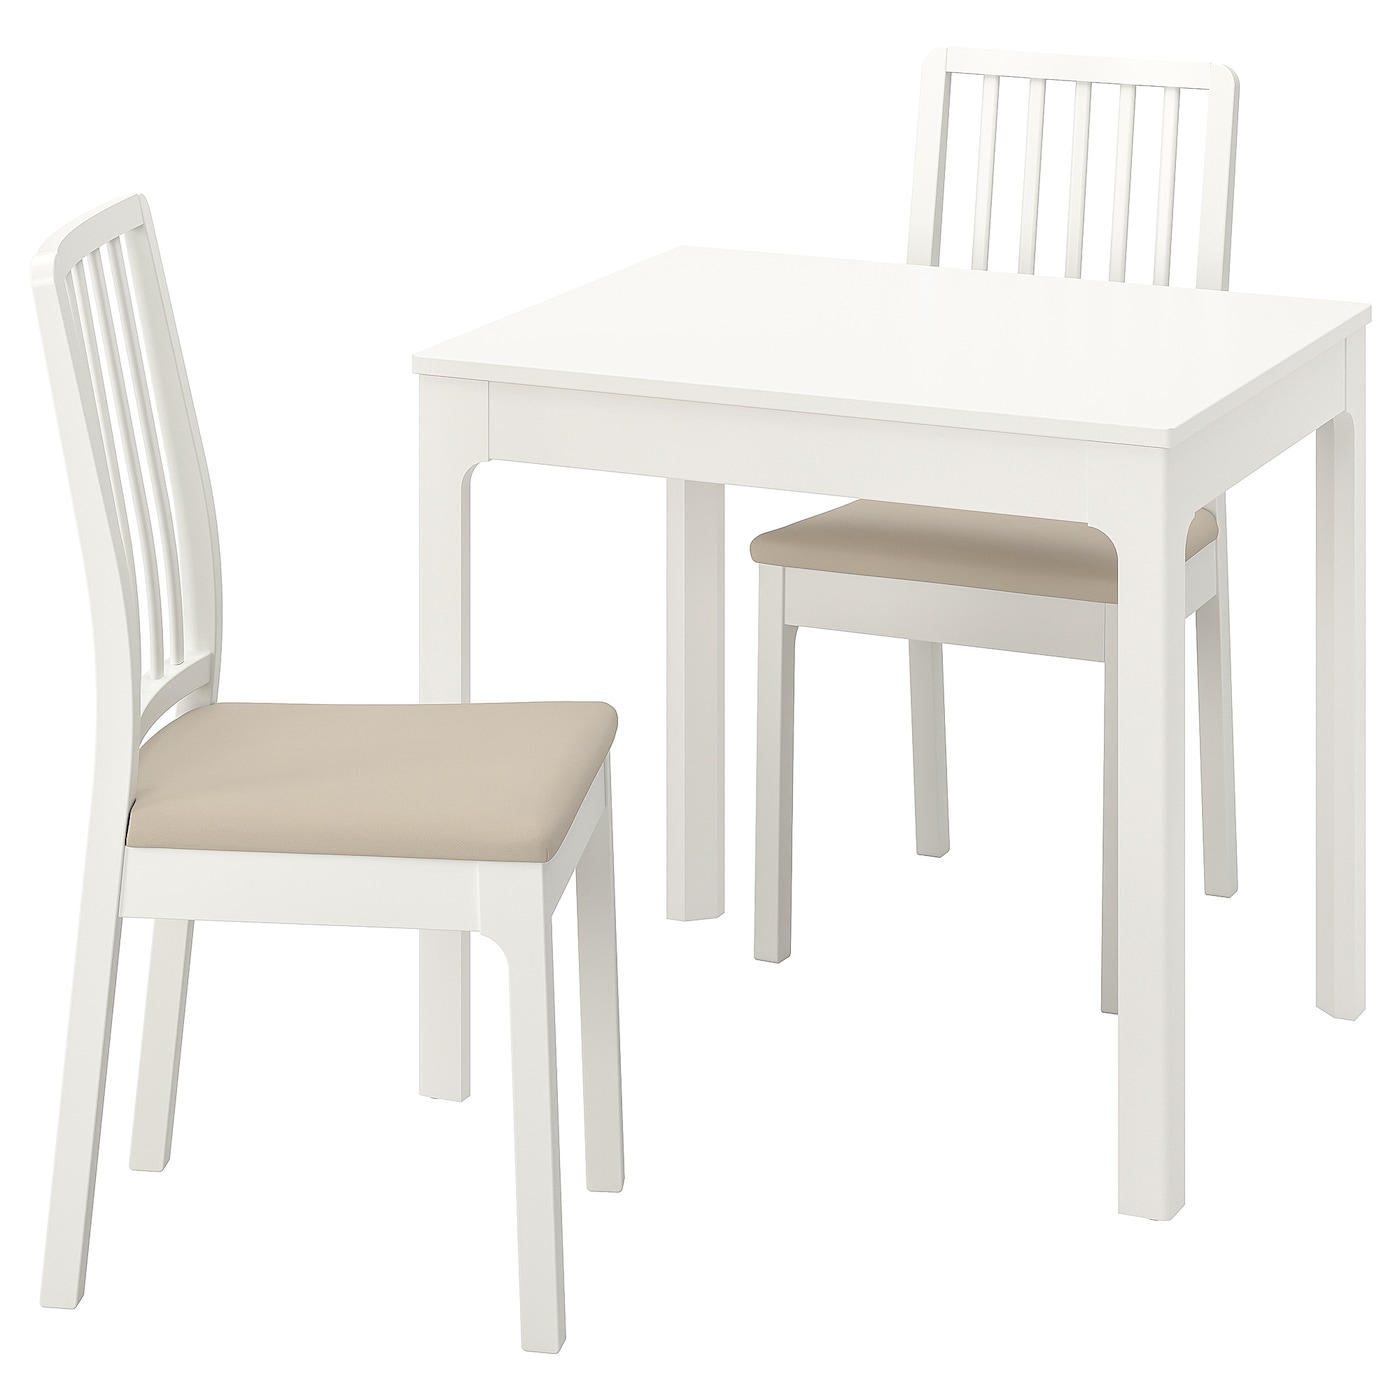 Стол и 2 стула - IKEA EKEDALEN/ЭКЕДАЛЕН ИКЕА, 120х80см, белый/бежевый